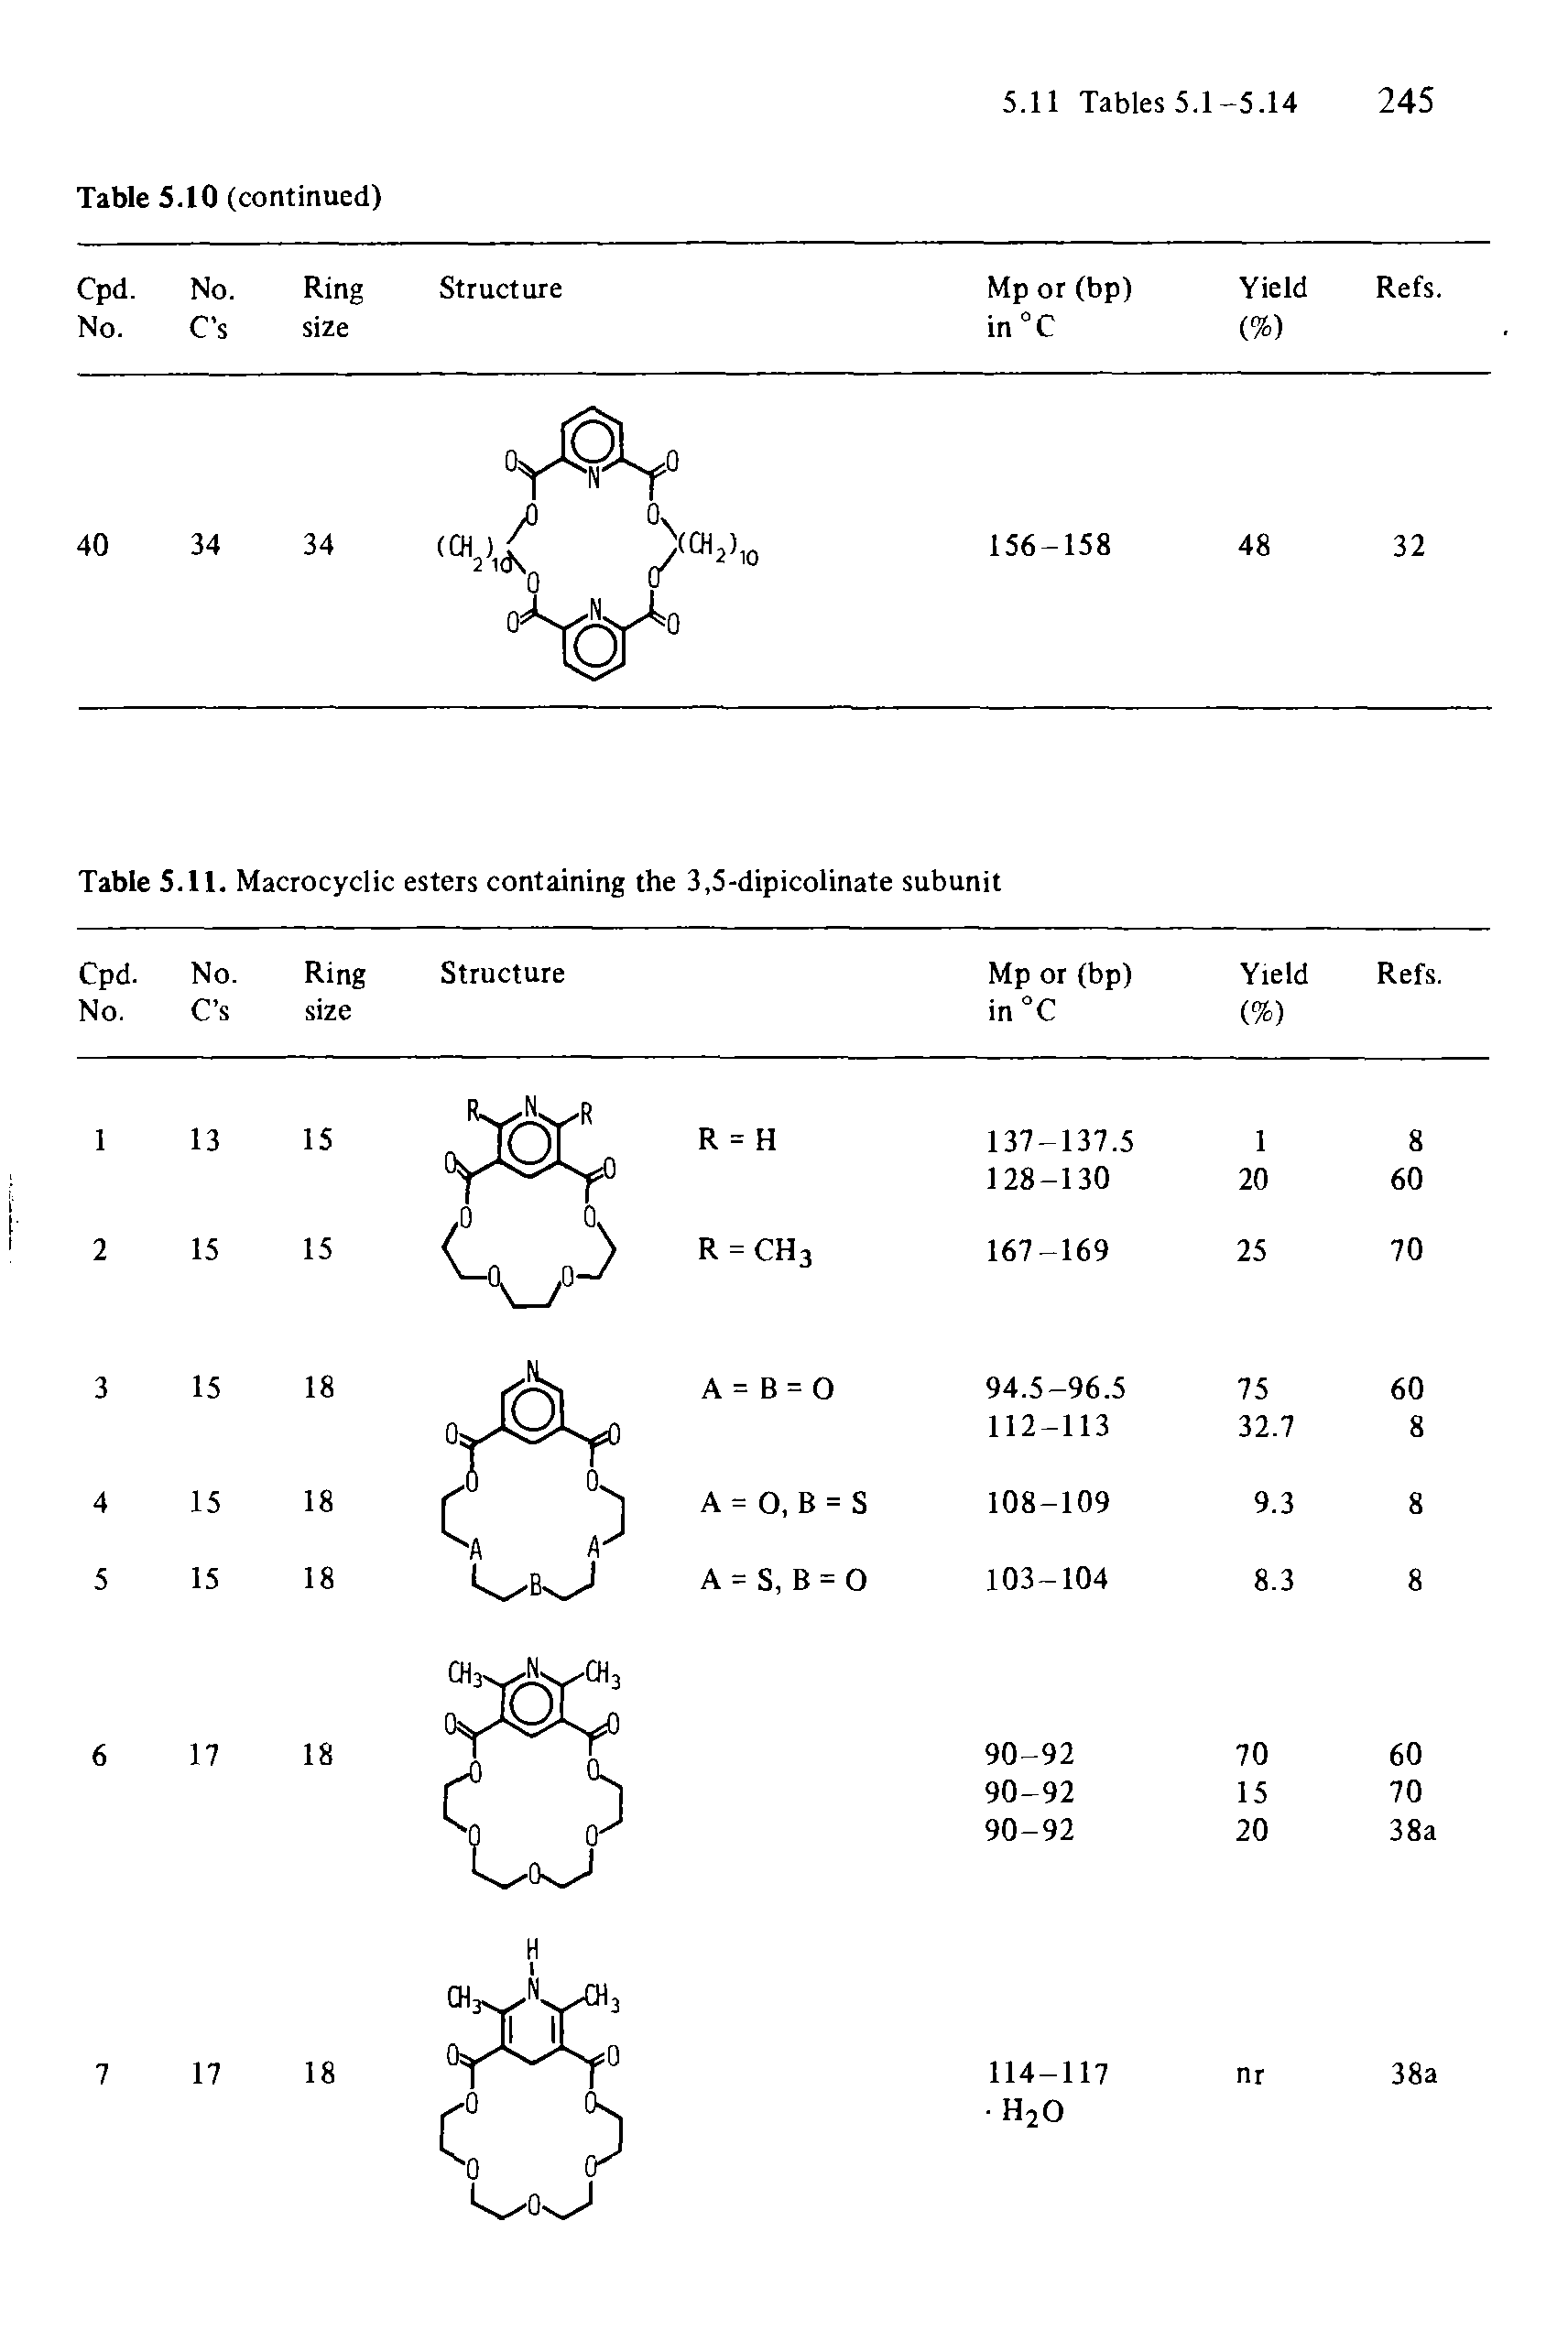 Table 5.11. Macrocyclic esters containing the 3,5-dipicolinate subunit...